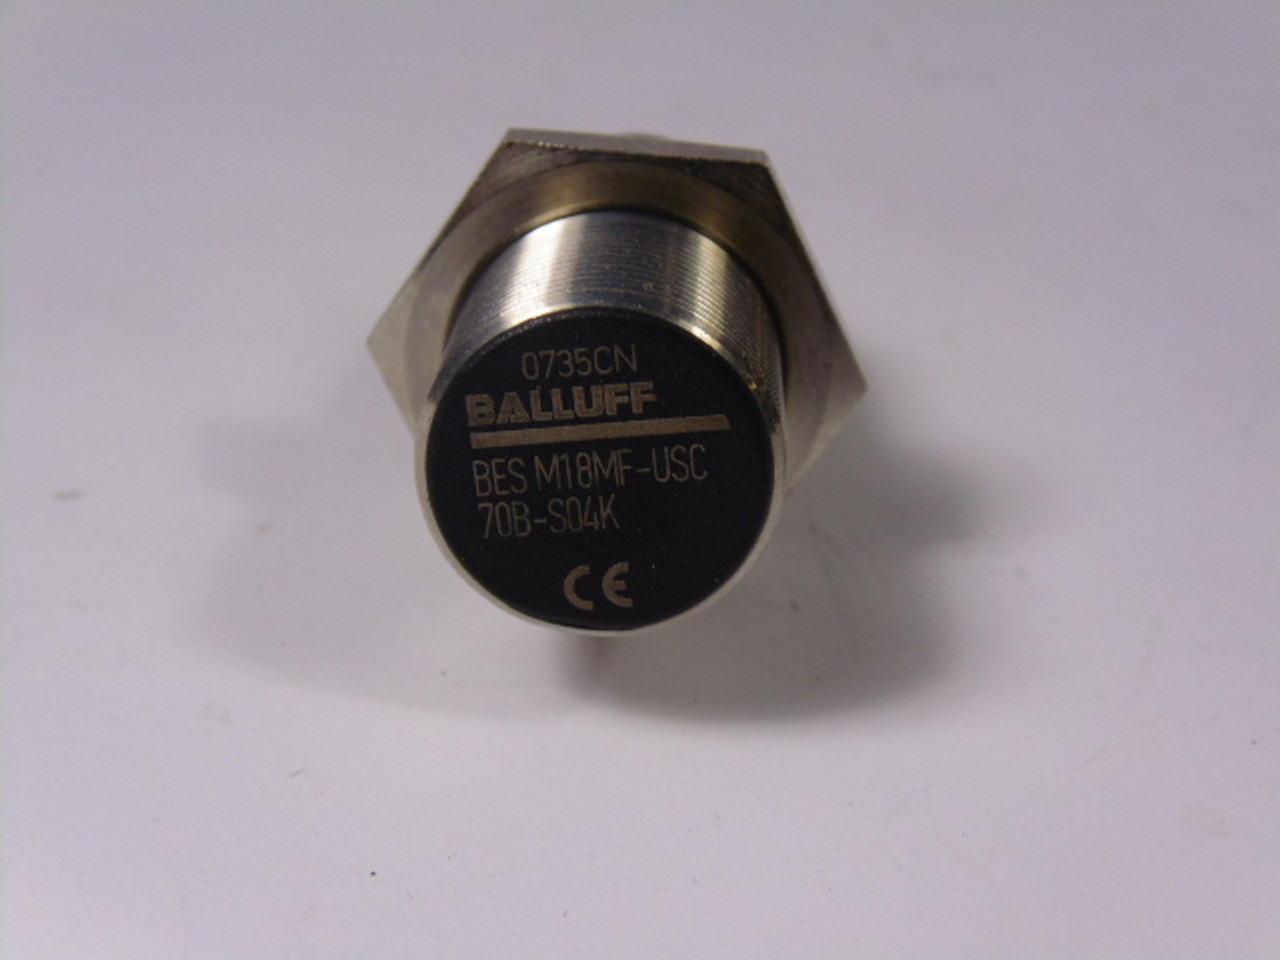 Balluff BES-M18MF-USC70B-S04K Proximity Switch 10-30VDC 100mA 7mm USED